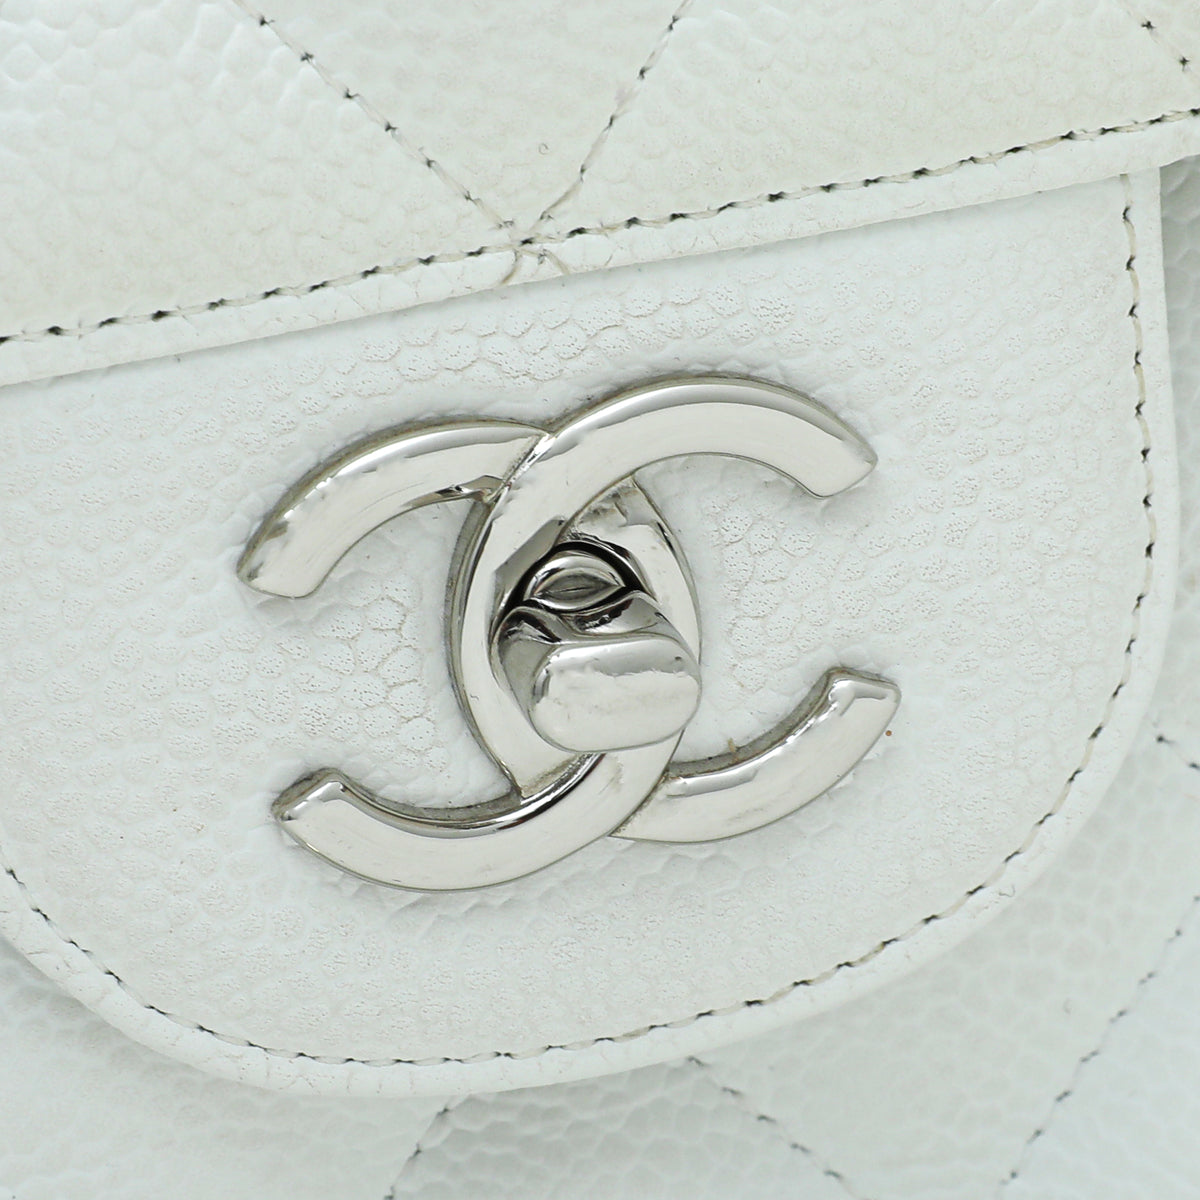 Chanel White Classic Double Flap Jumbo Bag